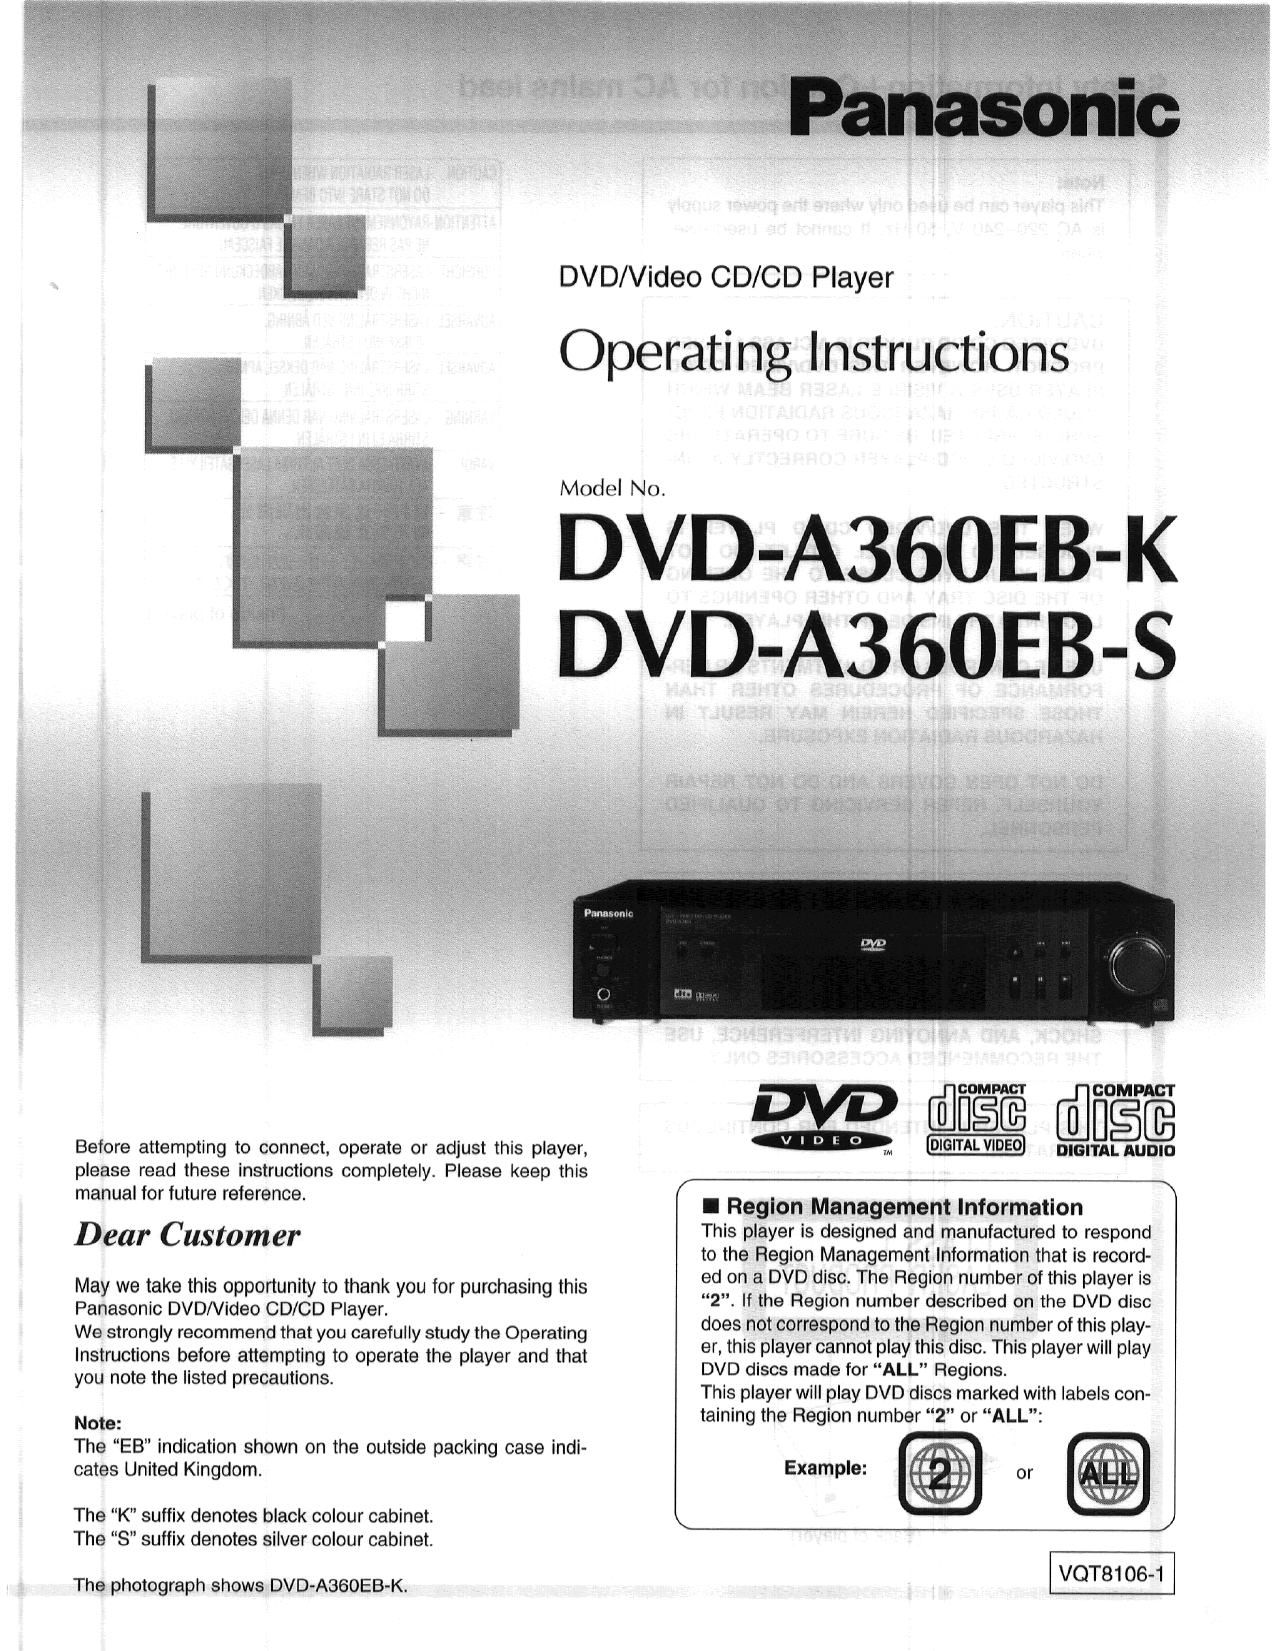 Panasonic Dvda360 Operating Instructions Manualzz